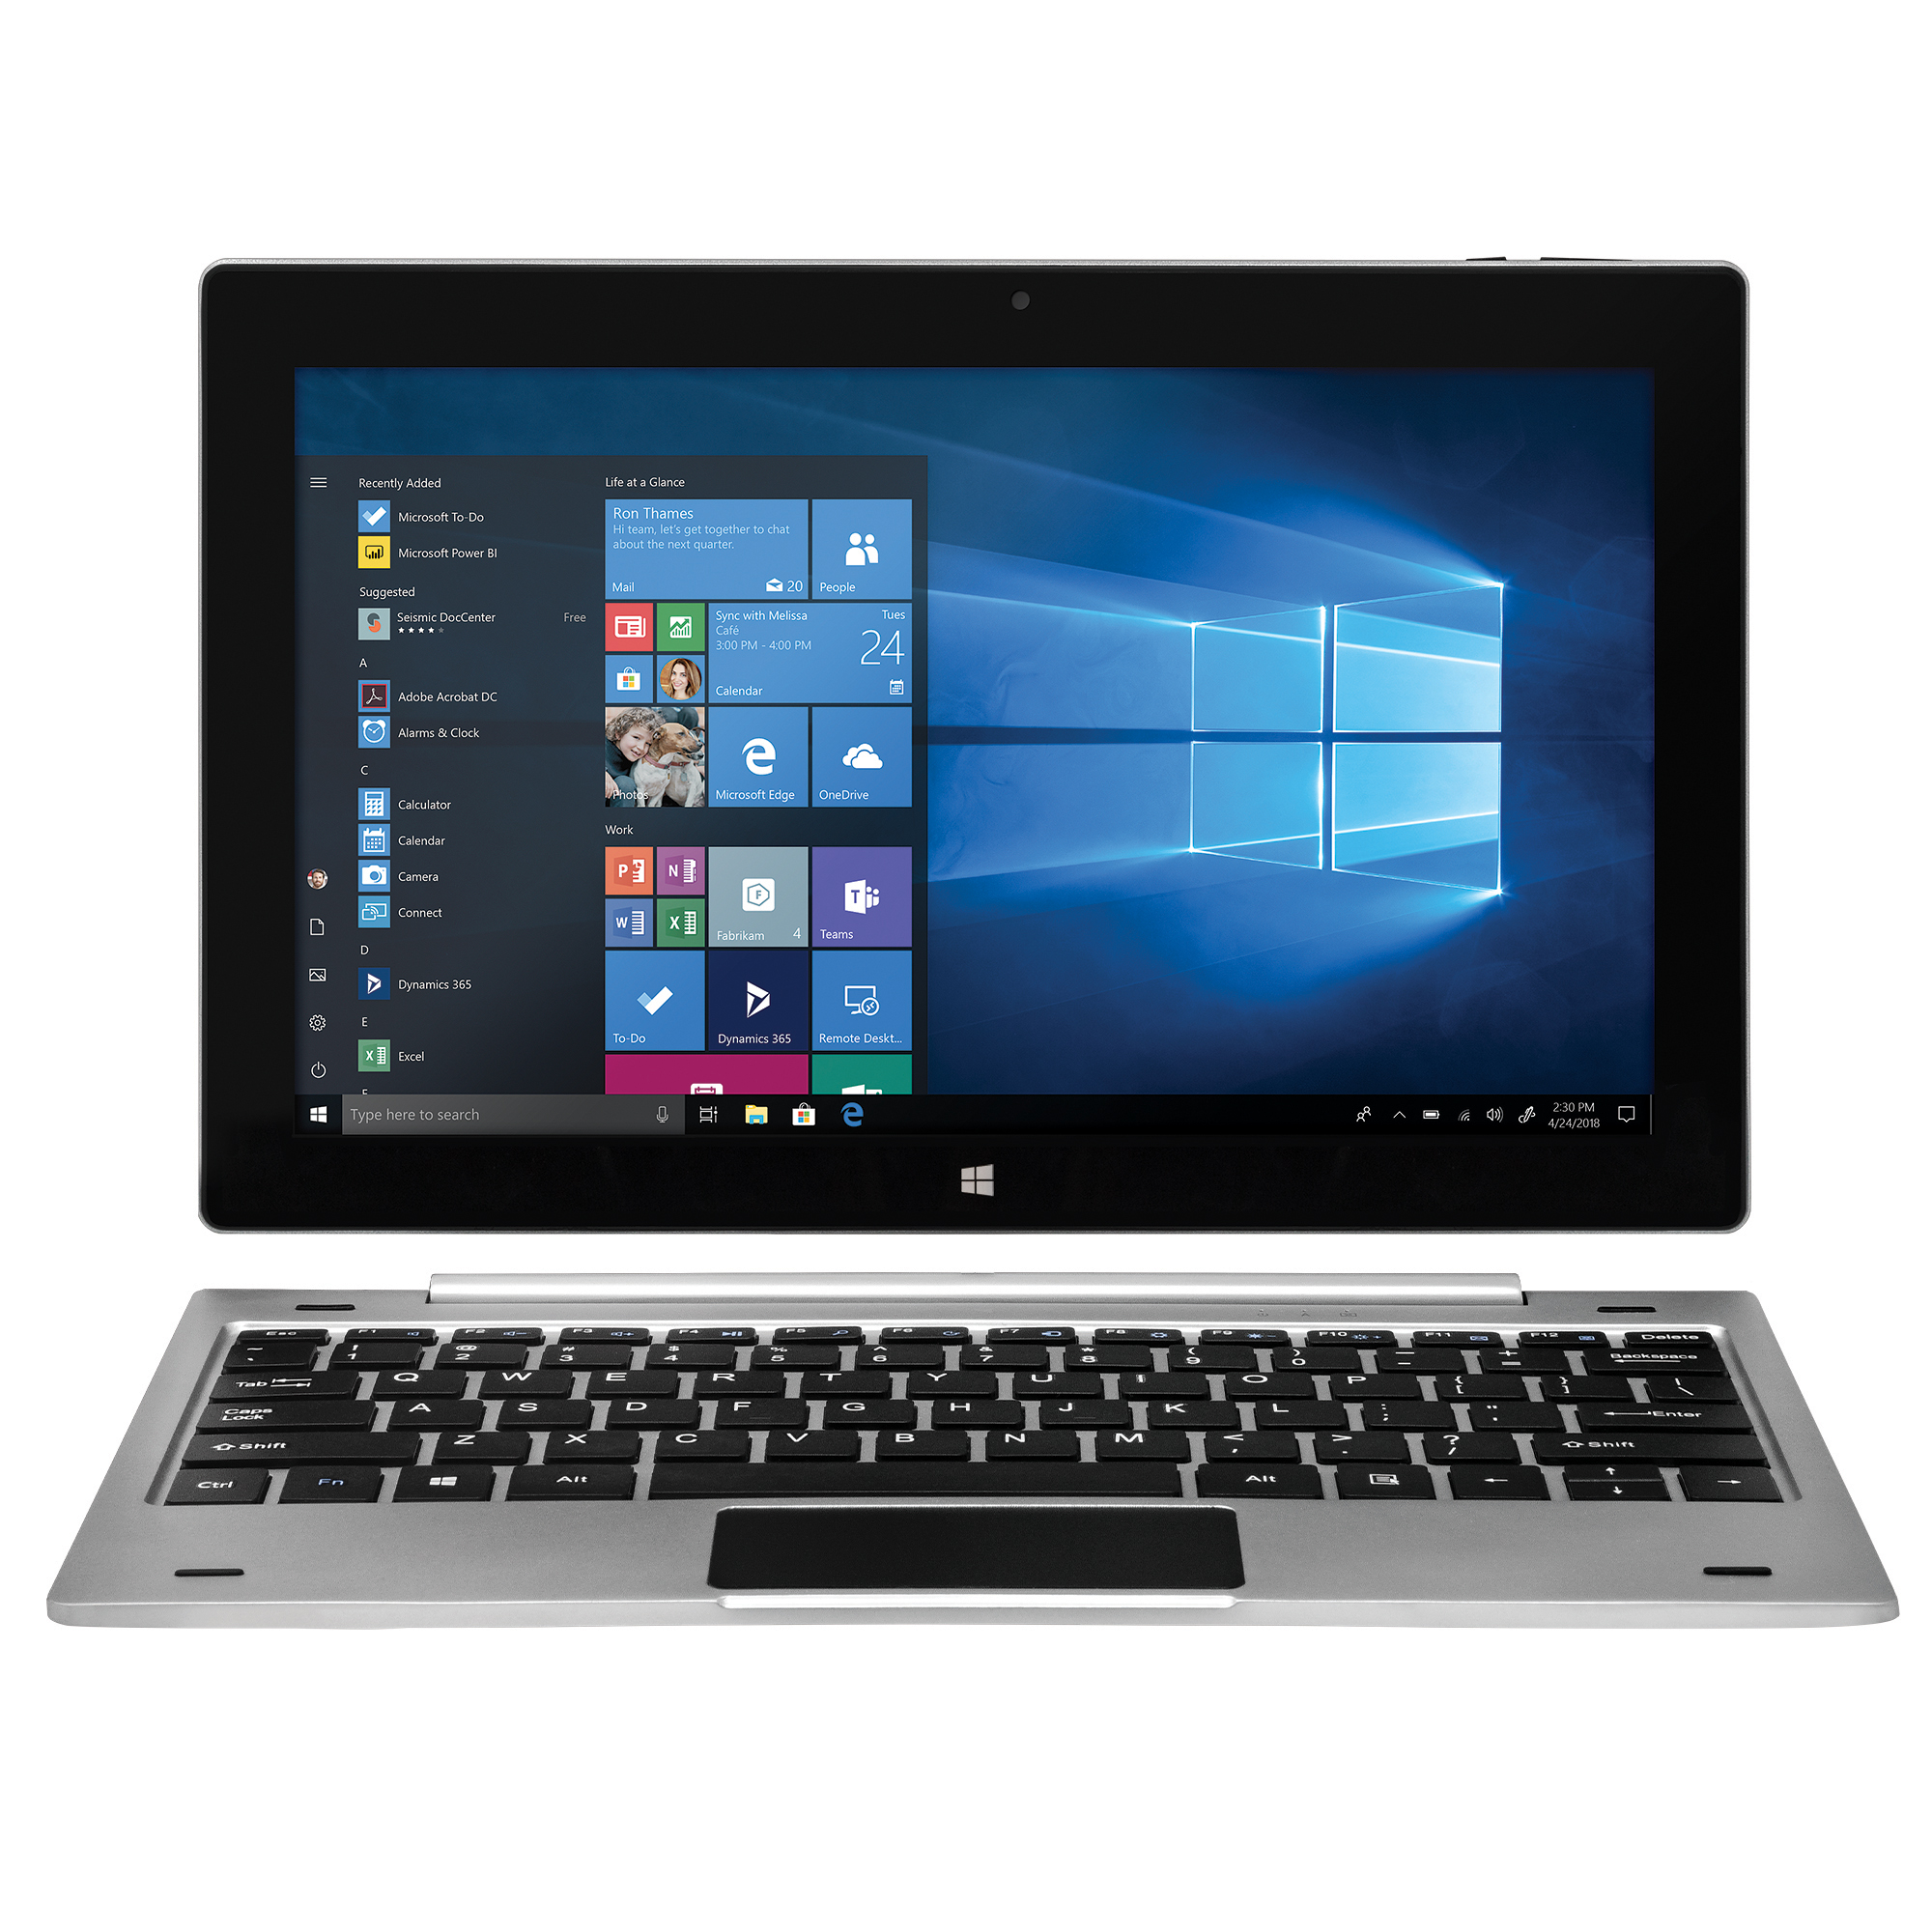 EVOO 11.6" Windows Tablet with Keyboard, Full HD, Intel Processor, Quad Core, 32GB Storage, Micro HDMI, Dual Cameras, Windows 10 Home, Silver - image 2 of 2